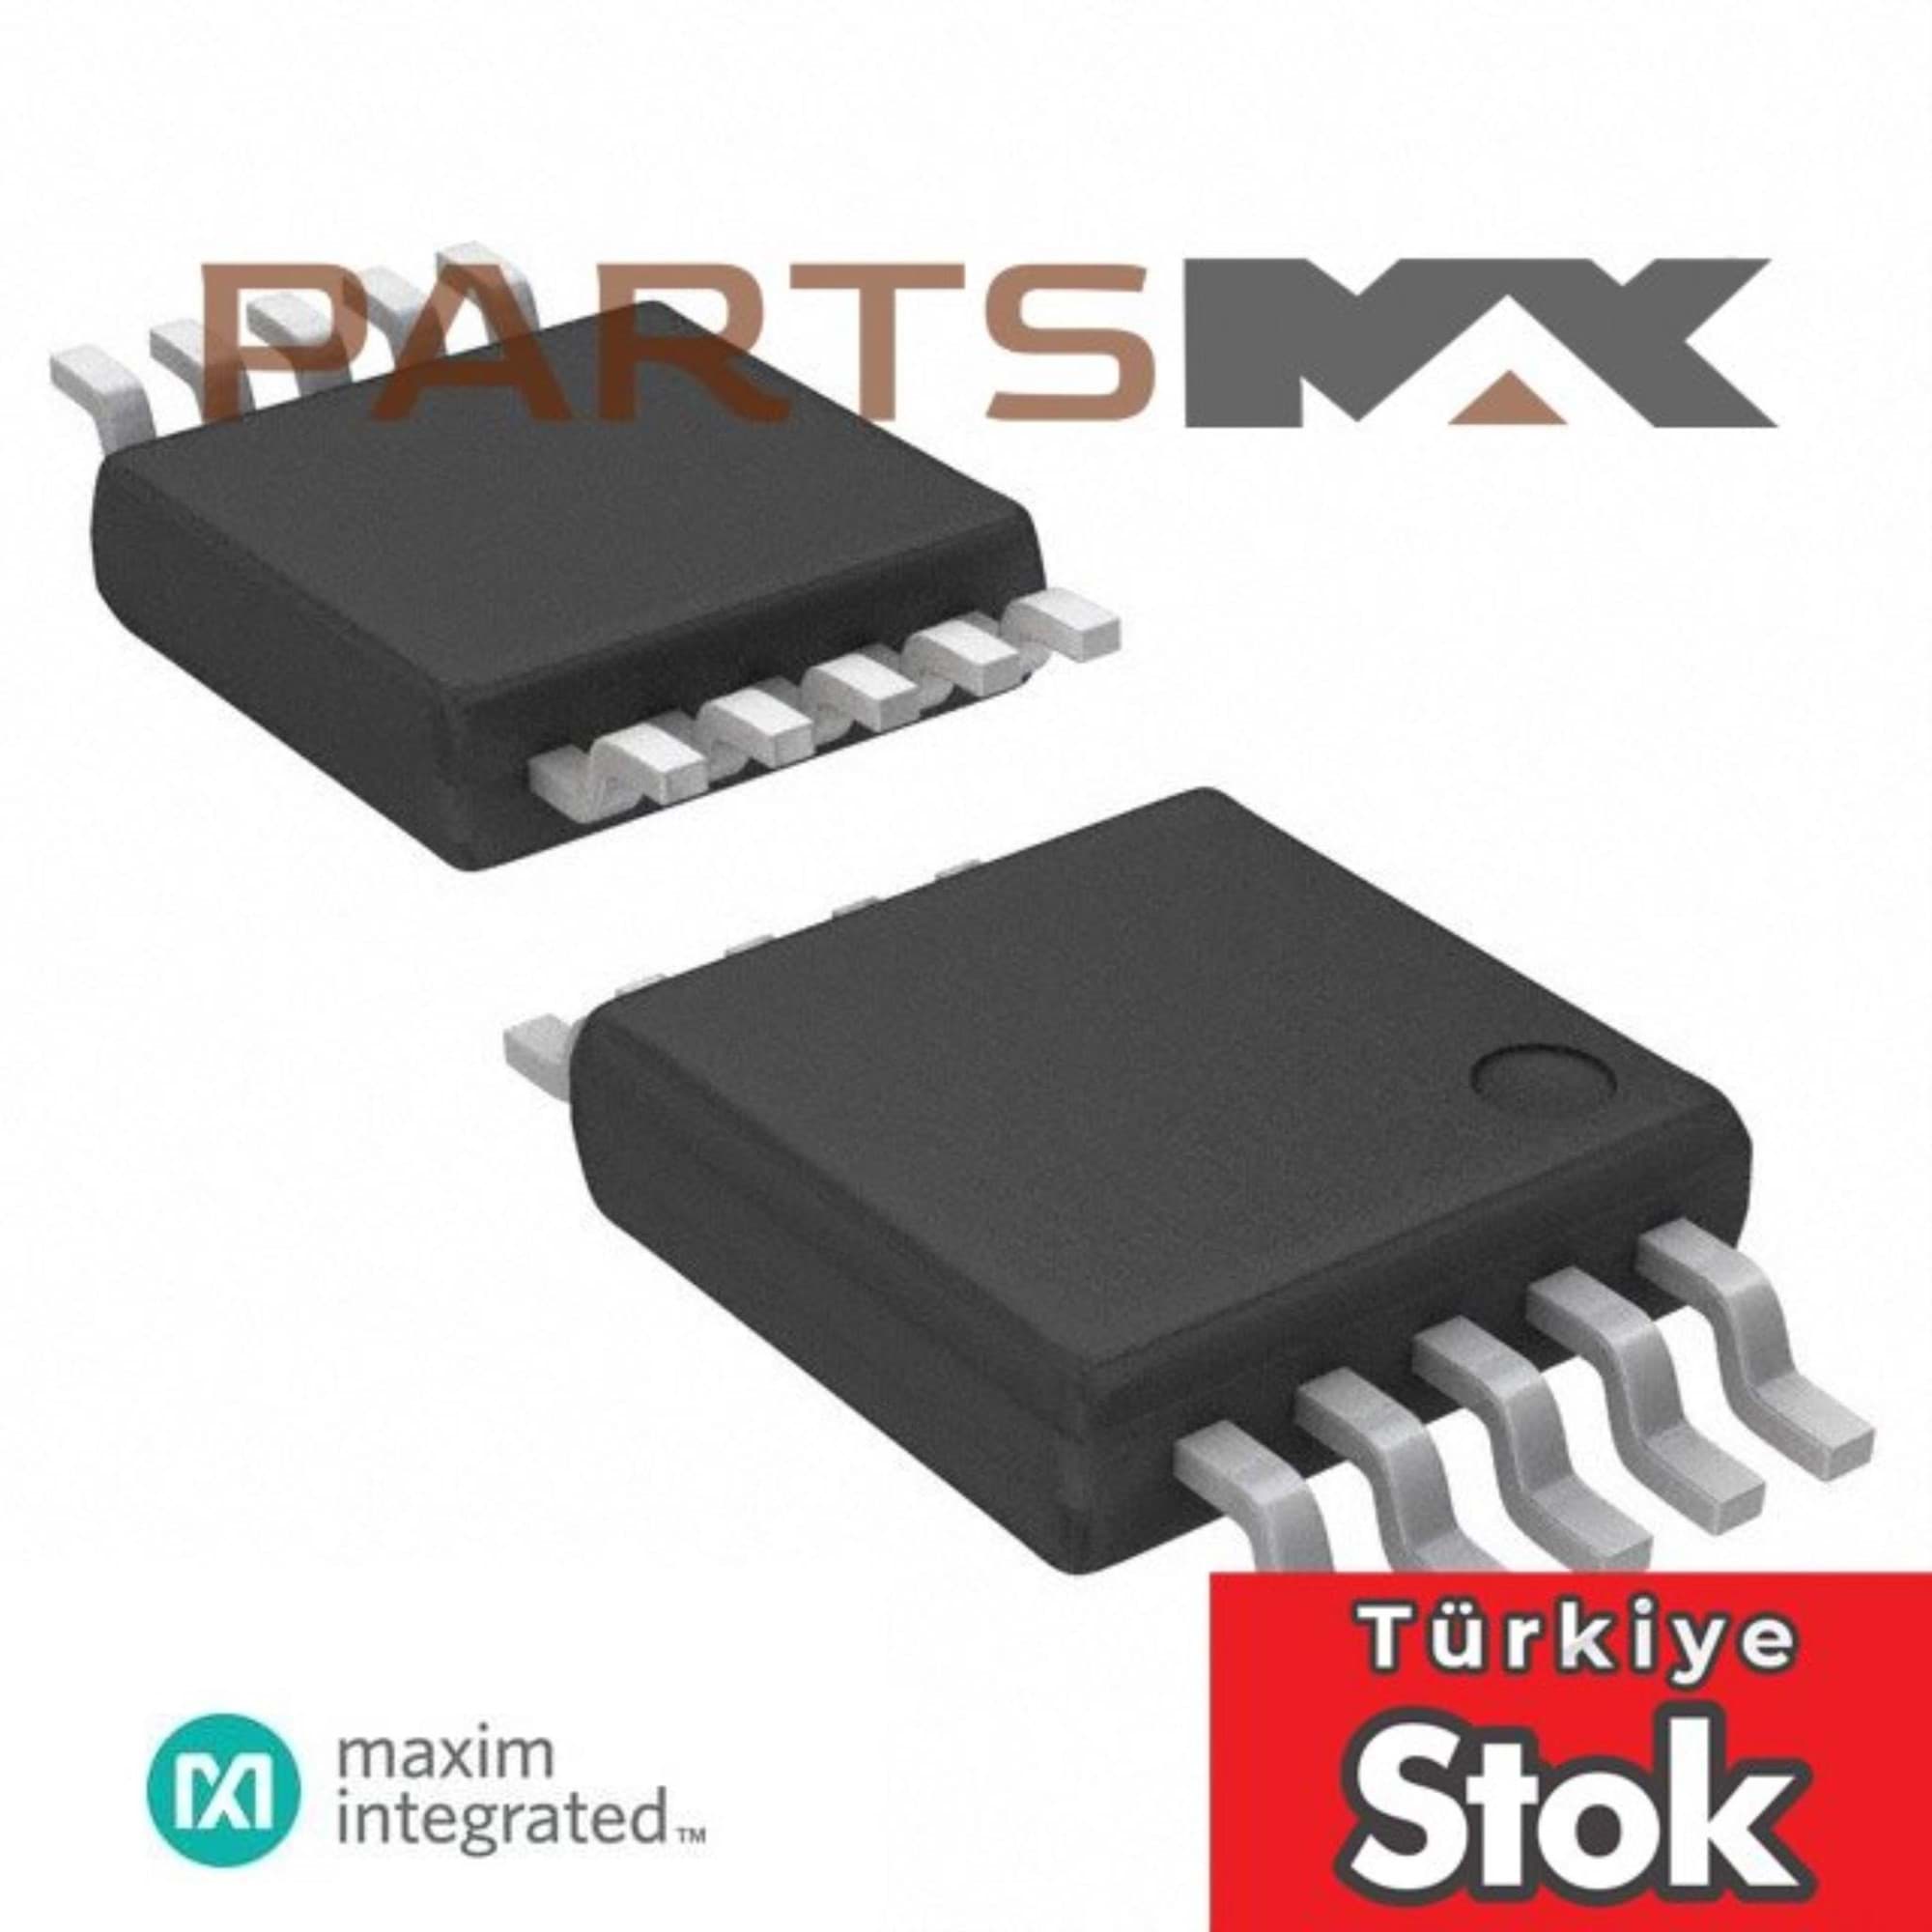 Picture of MAX1694EUB+ Maxim Integrated | Partsmax Türkiye